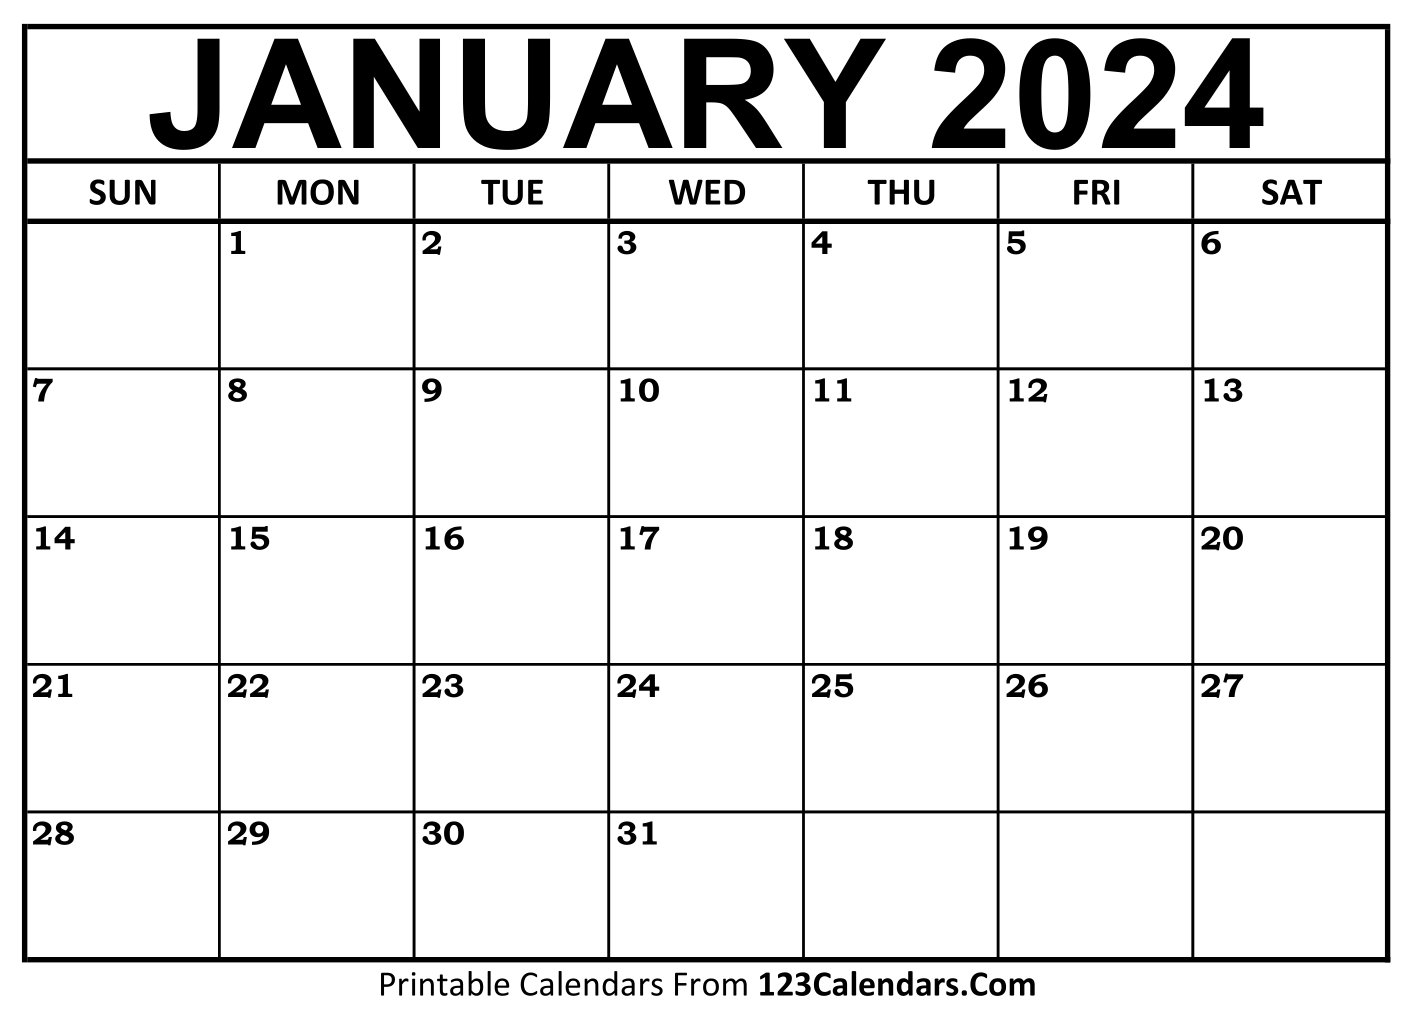 Printable January 2024 Calendar Templates - 123Calendars for Printable January 2024 Calendar Page